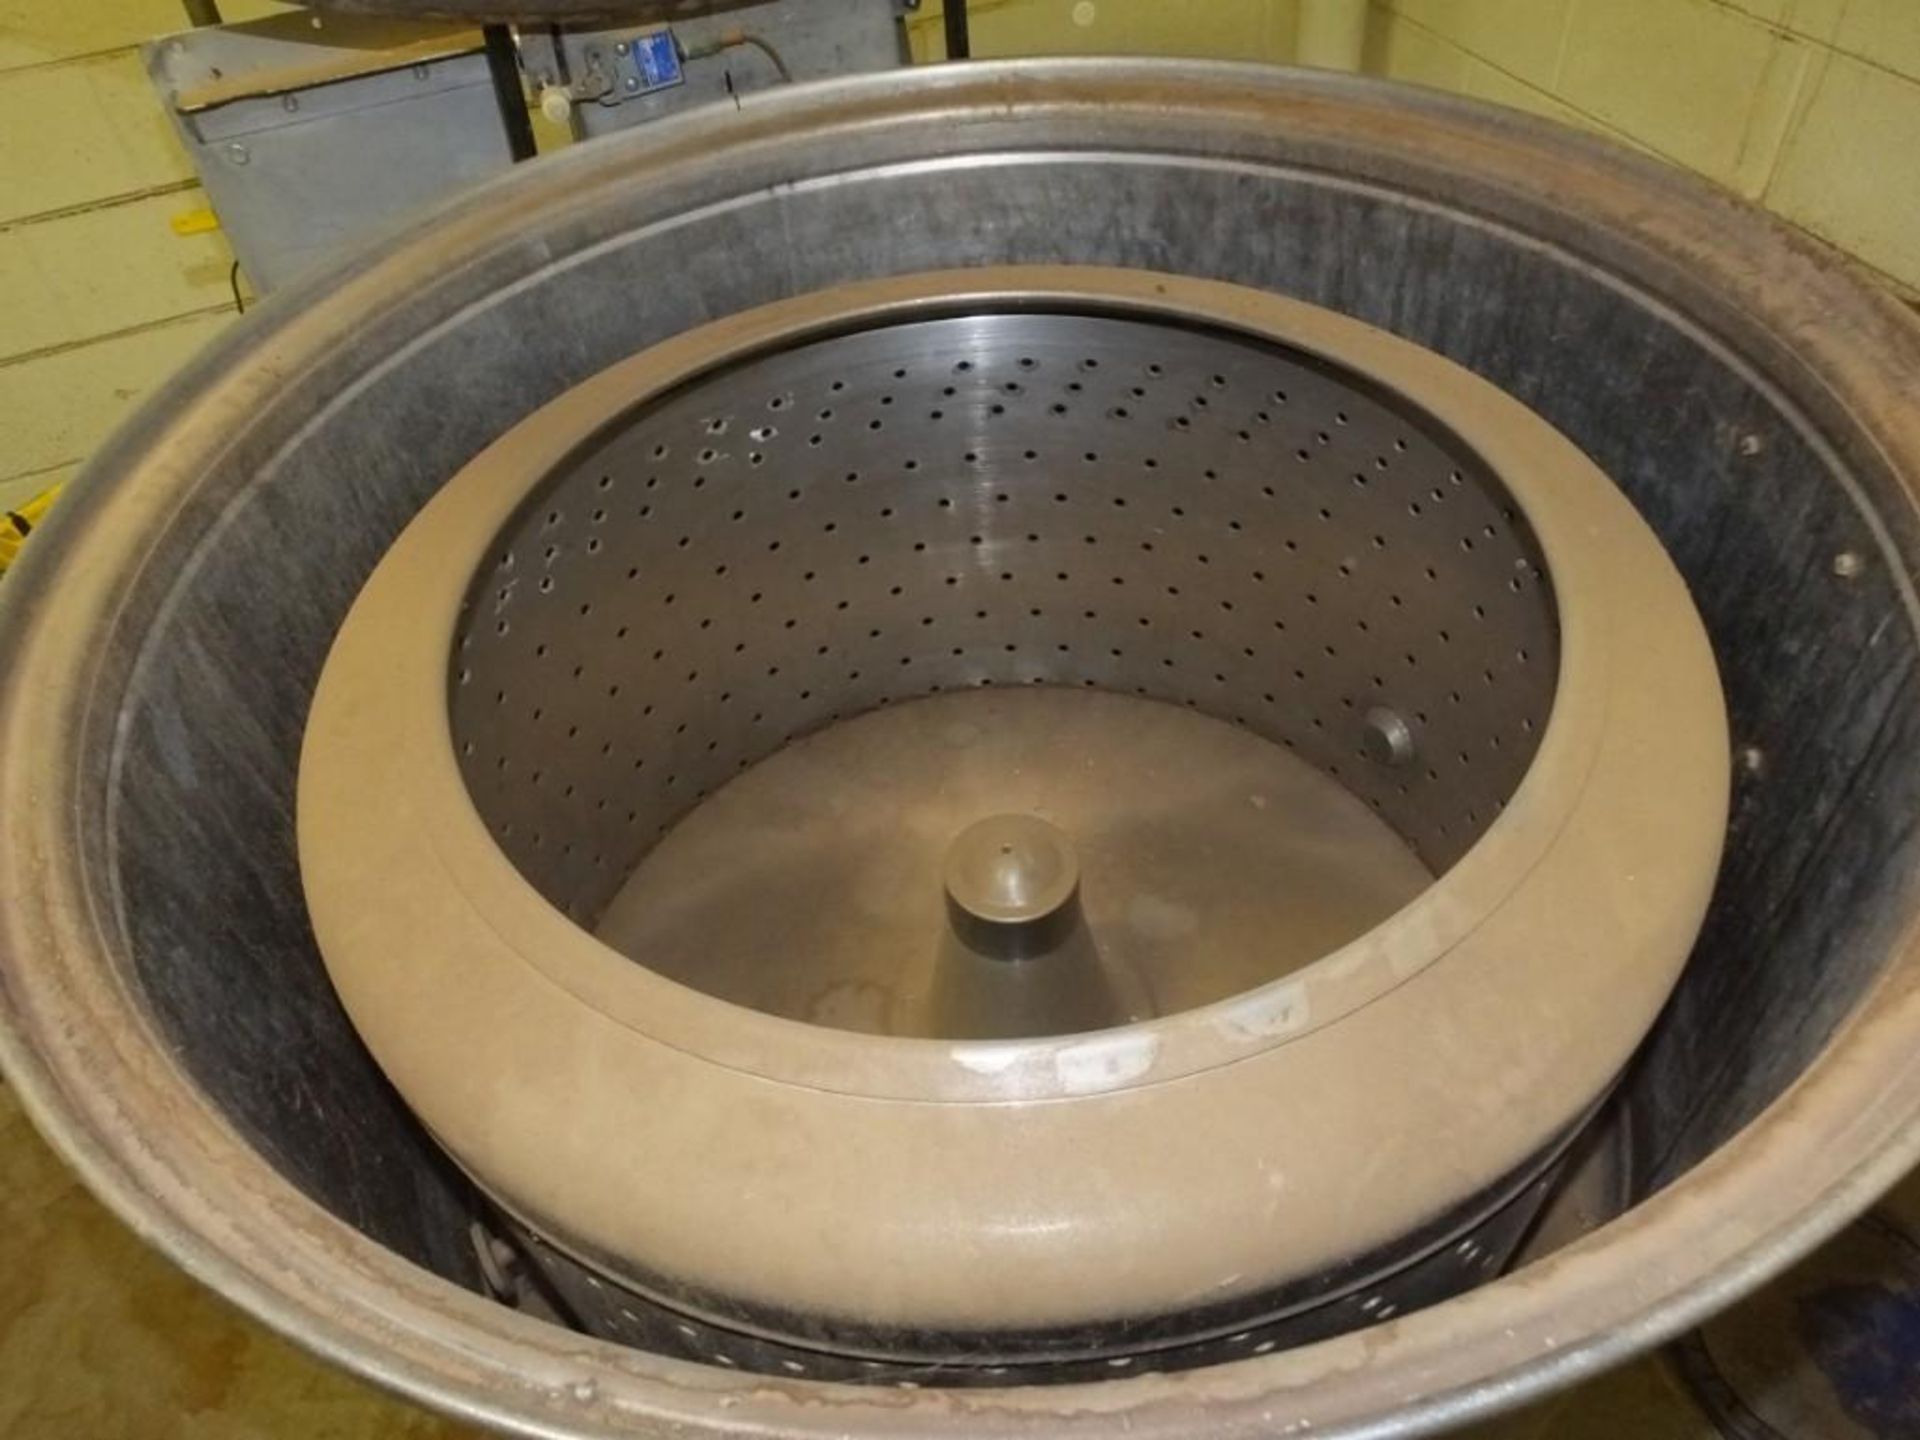 1994 Bock FR8 Centrifugal Spin Dryer - Image 5 of 5